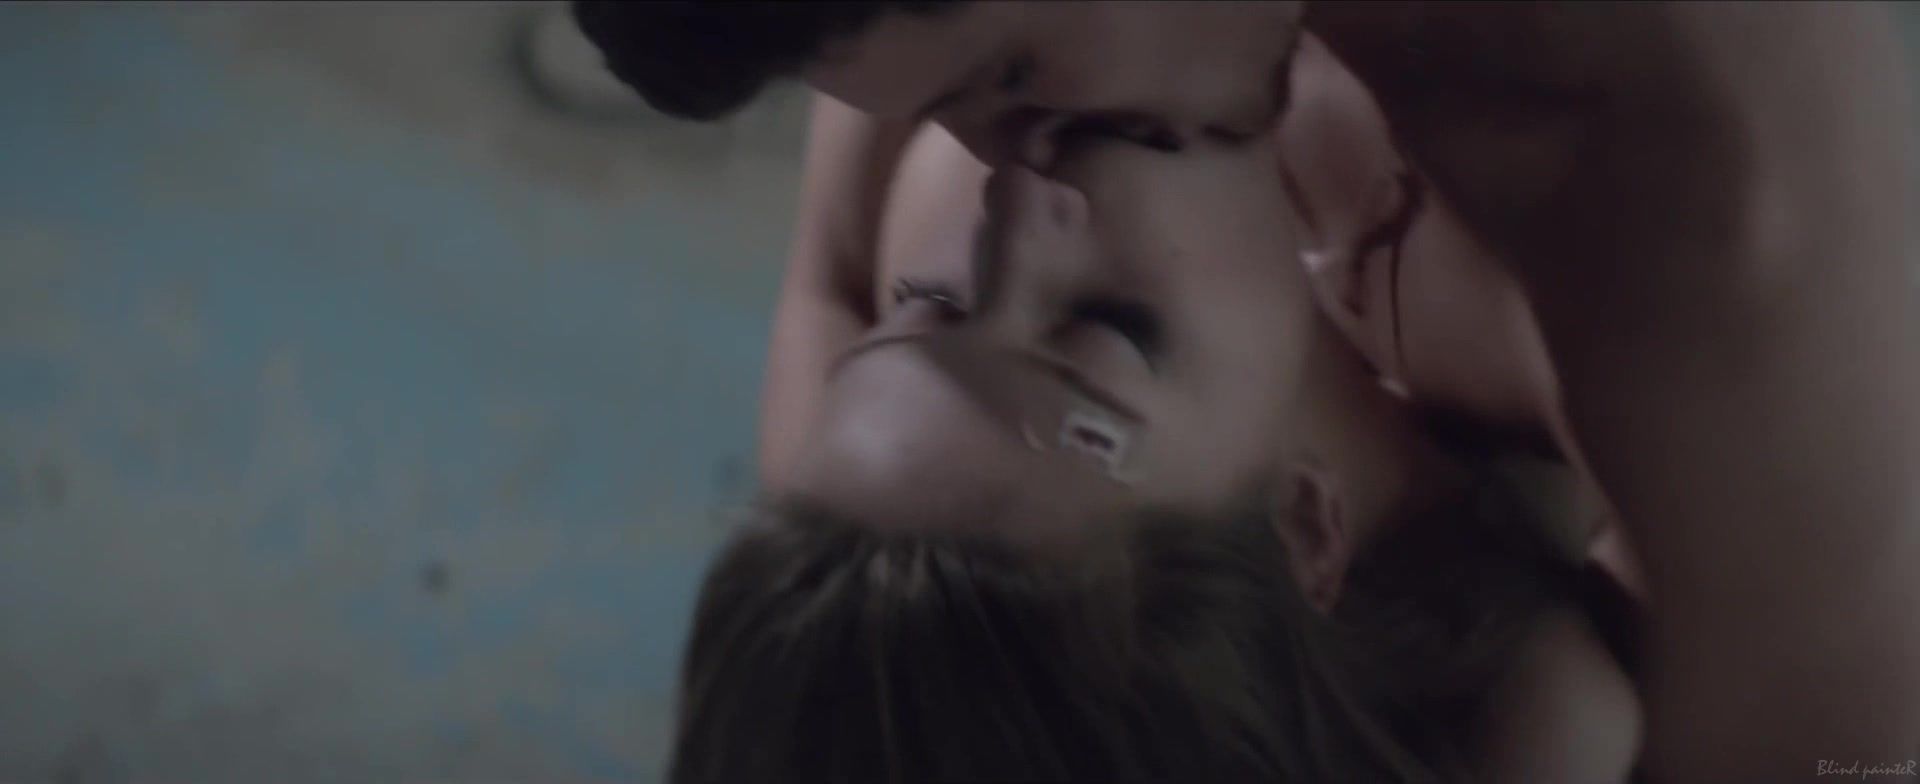 Instagram Sex video Adele Exarchopoulos nude - Fire (2015) Scissoring - 1